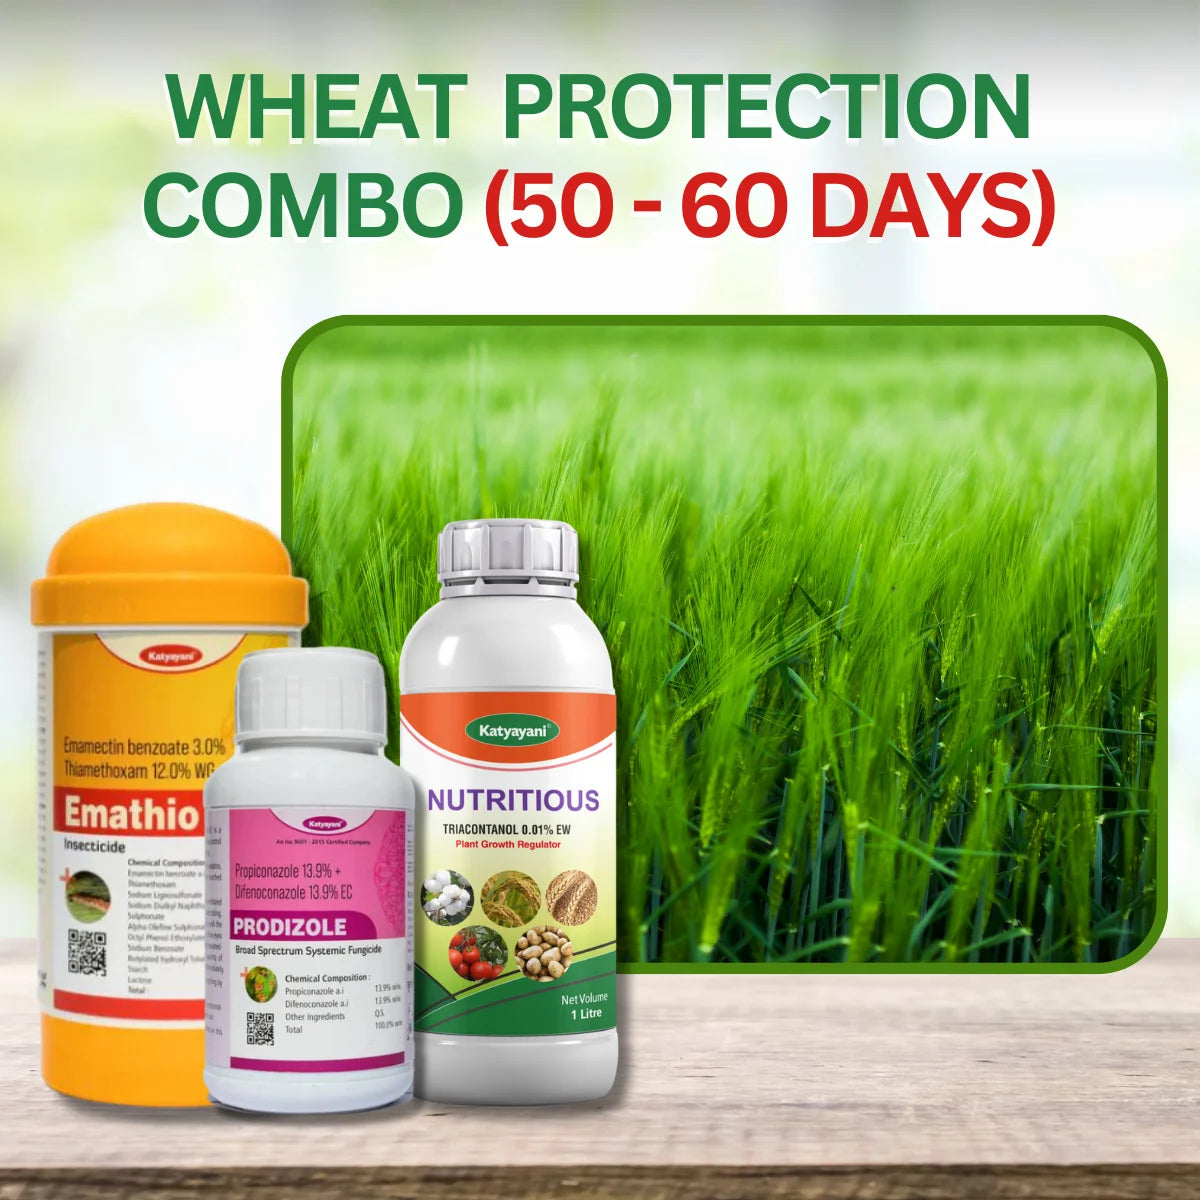 Katyayani Wheat Protection Kit (50-60 days)- Emathio(250 GM)+ Prodizole(250 ML) + Triacontanol(250 ML)